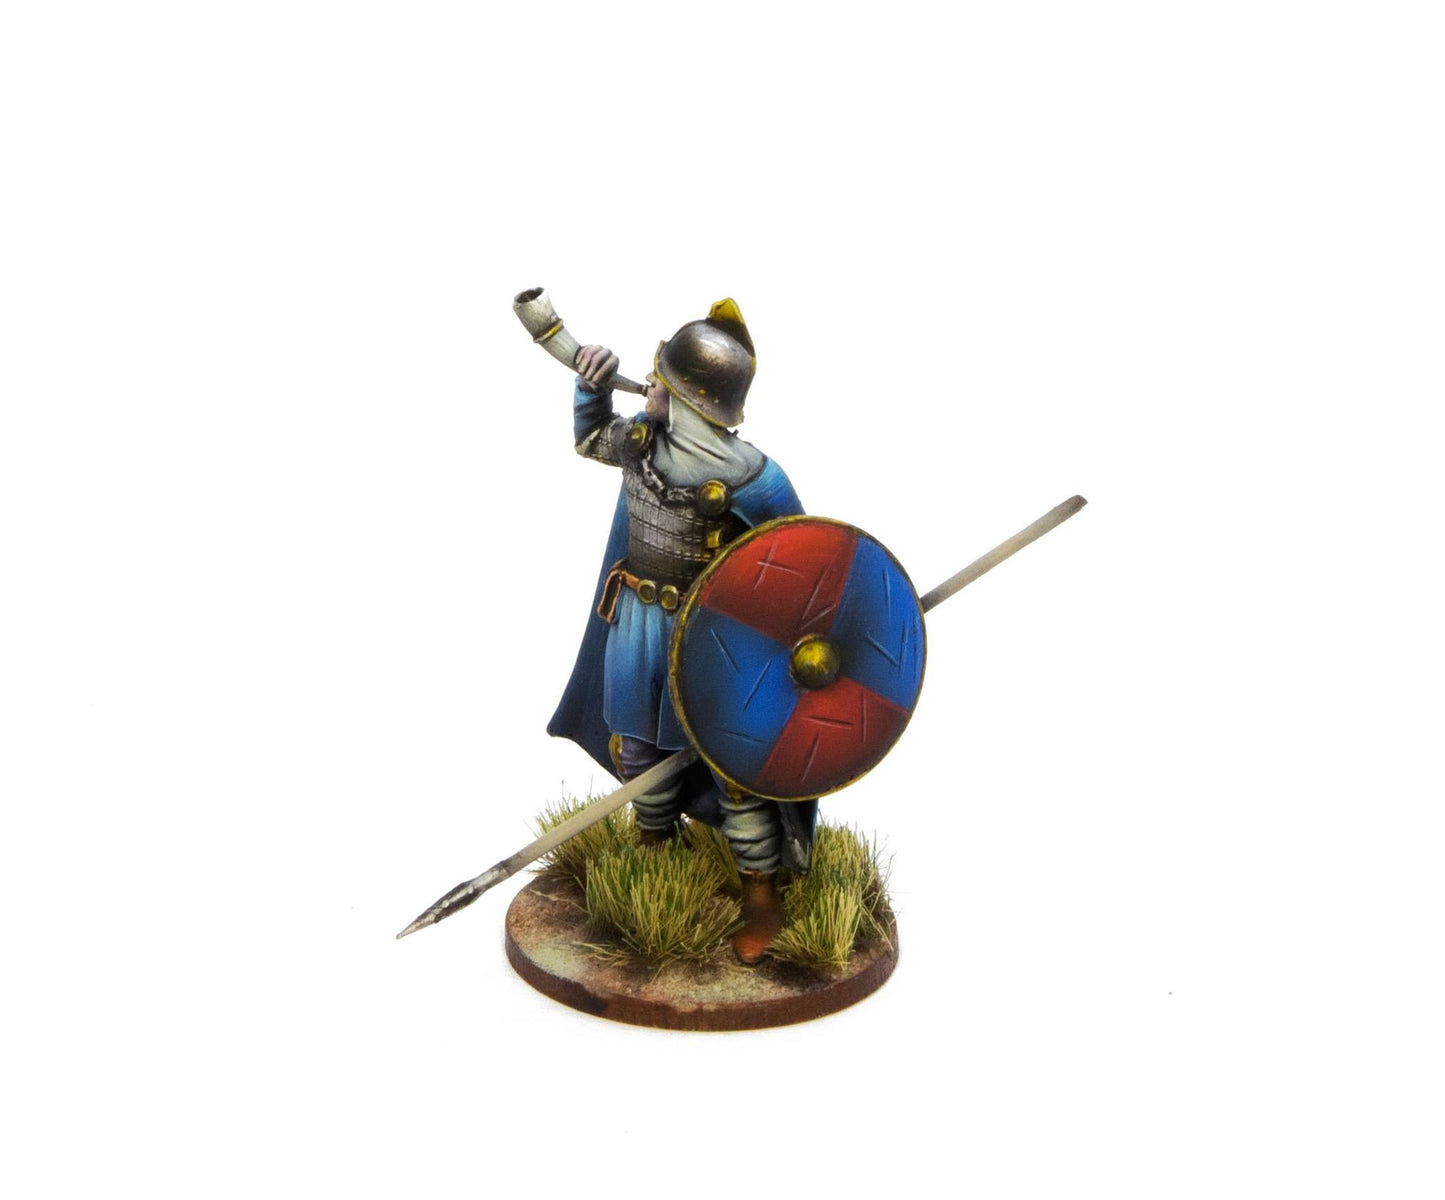 Roland, Carolingian Commander of the Paladins